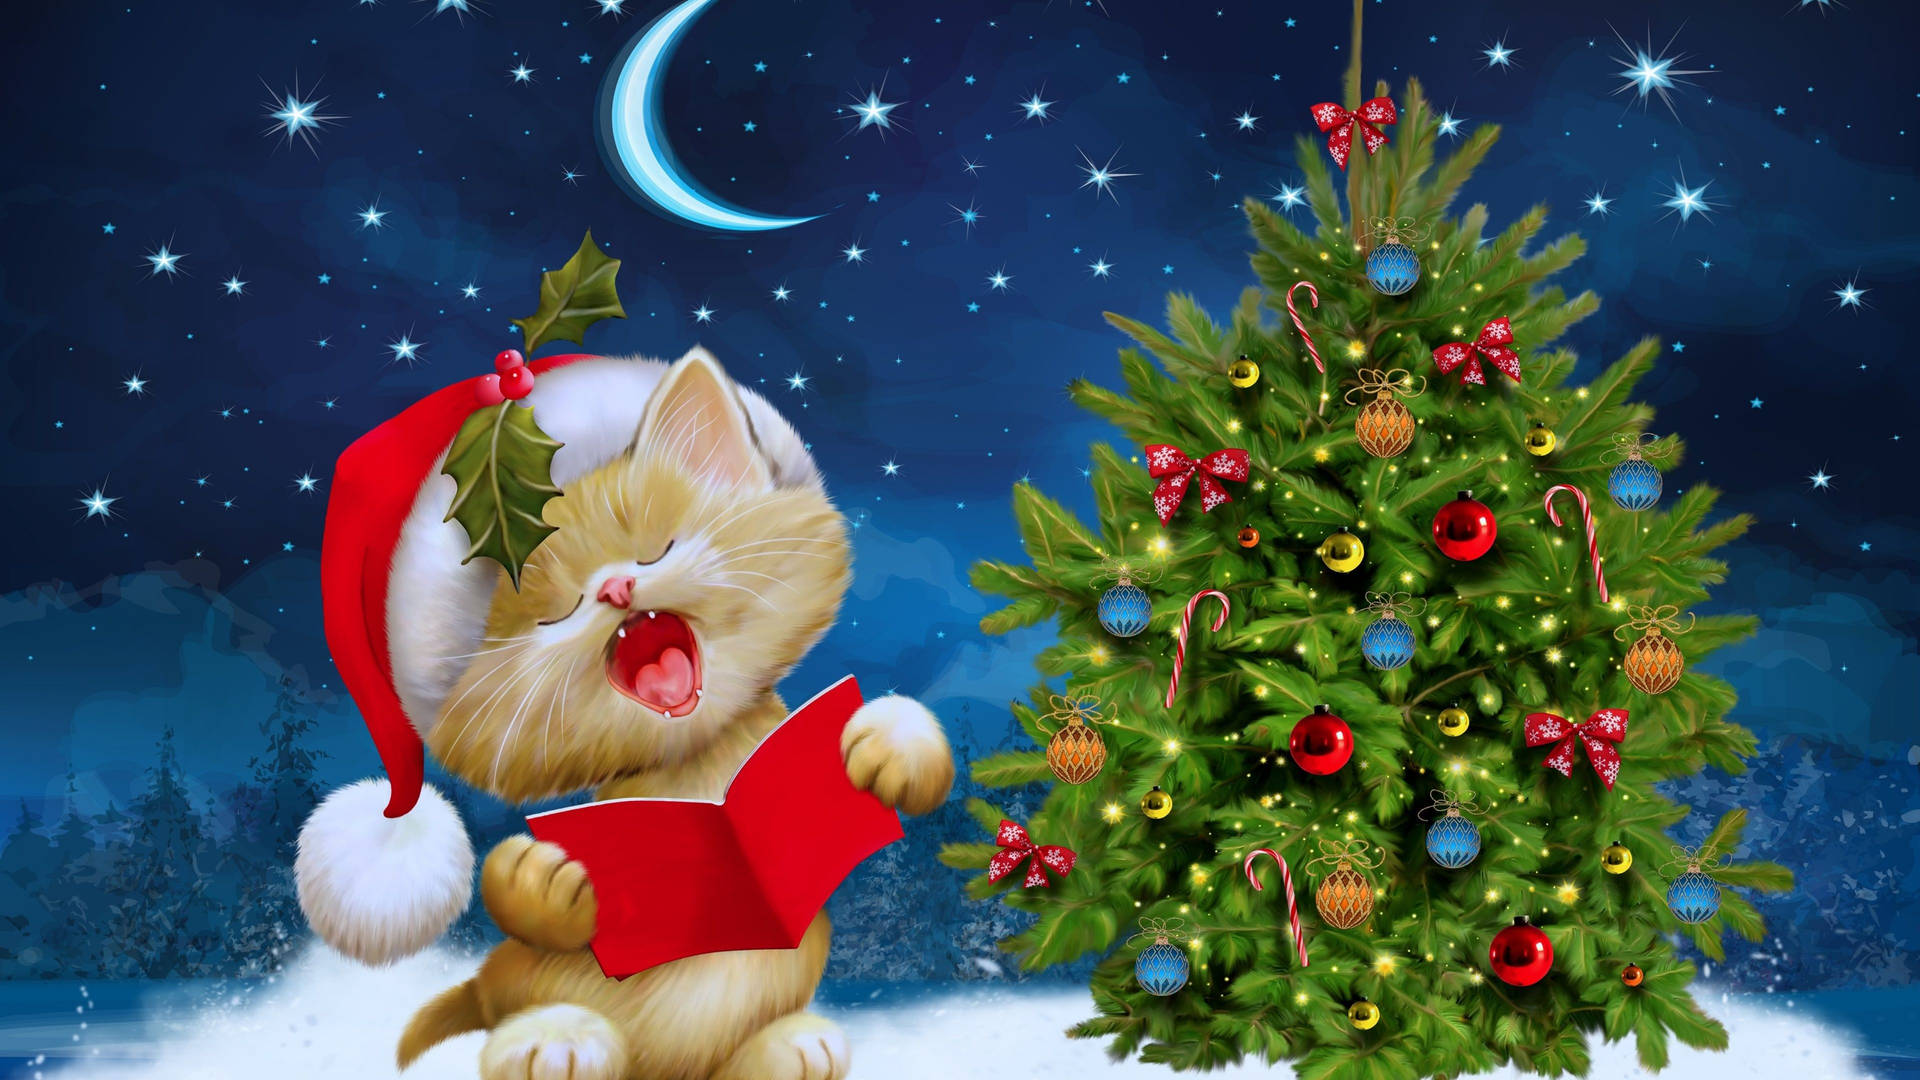 Adorable Kitten In A Festive Santa Hat Celebrating Christmas In 4k Ultra Hd.